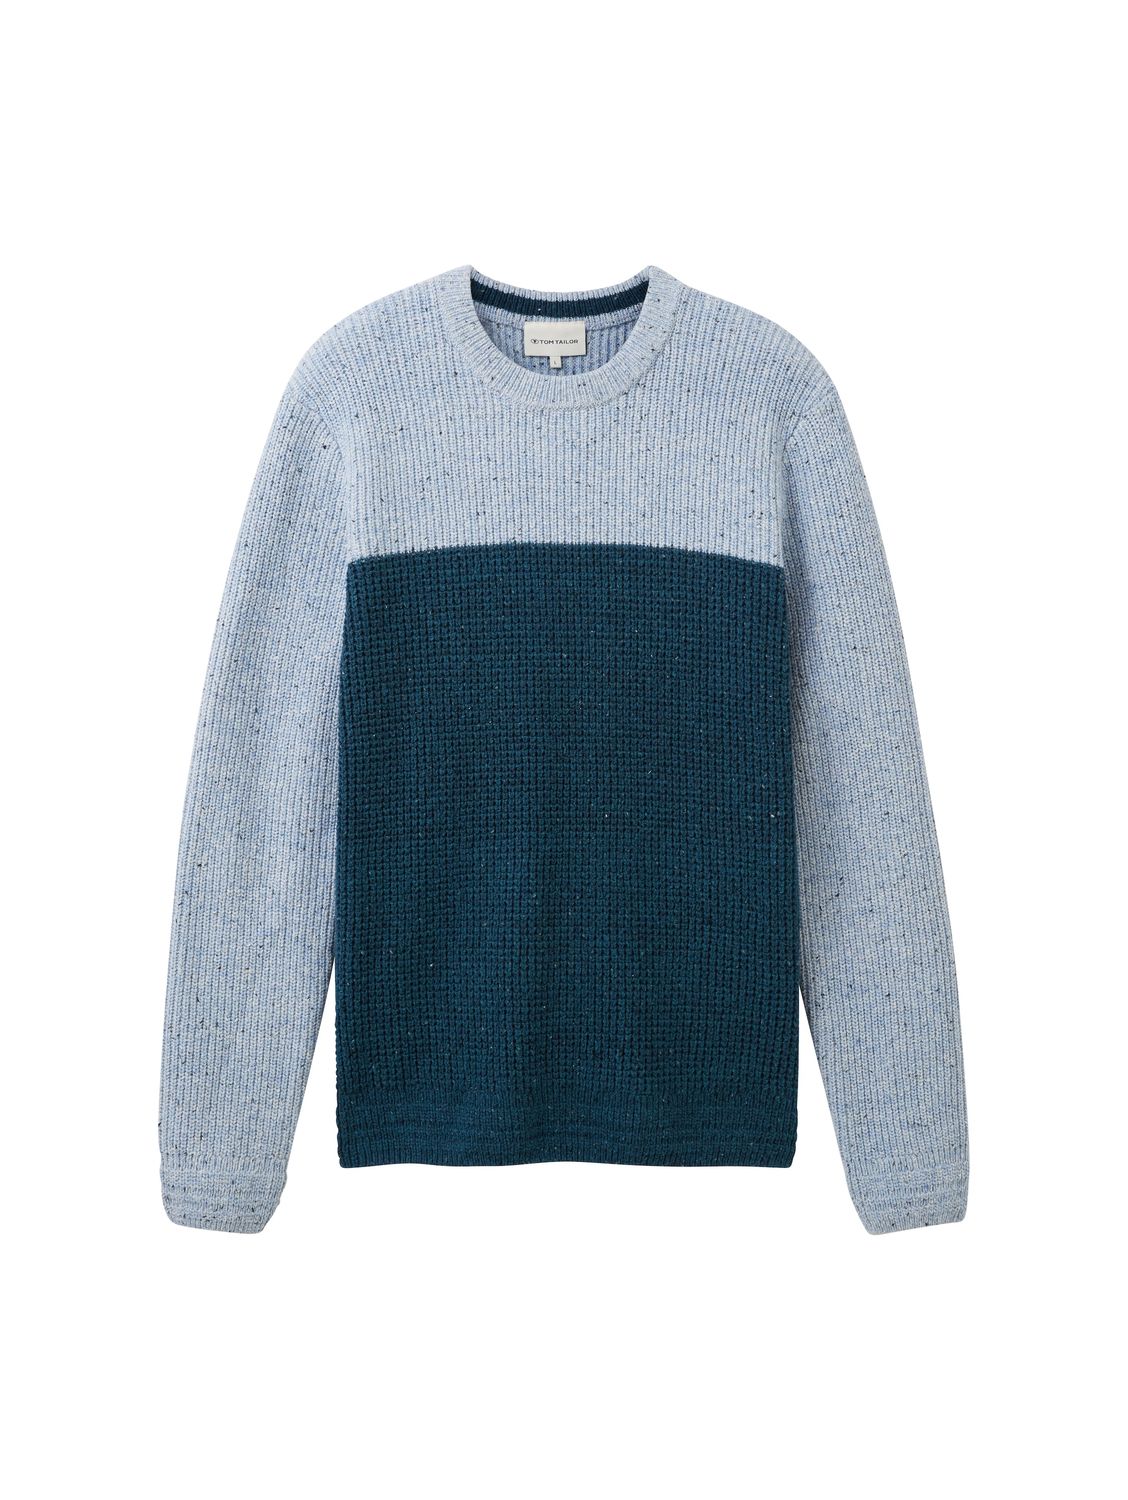 Пуловер Tom Tailor NEP STRUCTURED, синий пуловер tom tailor denim structured doublelayer синий